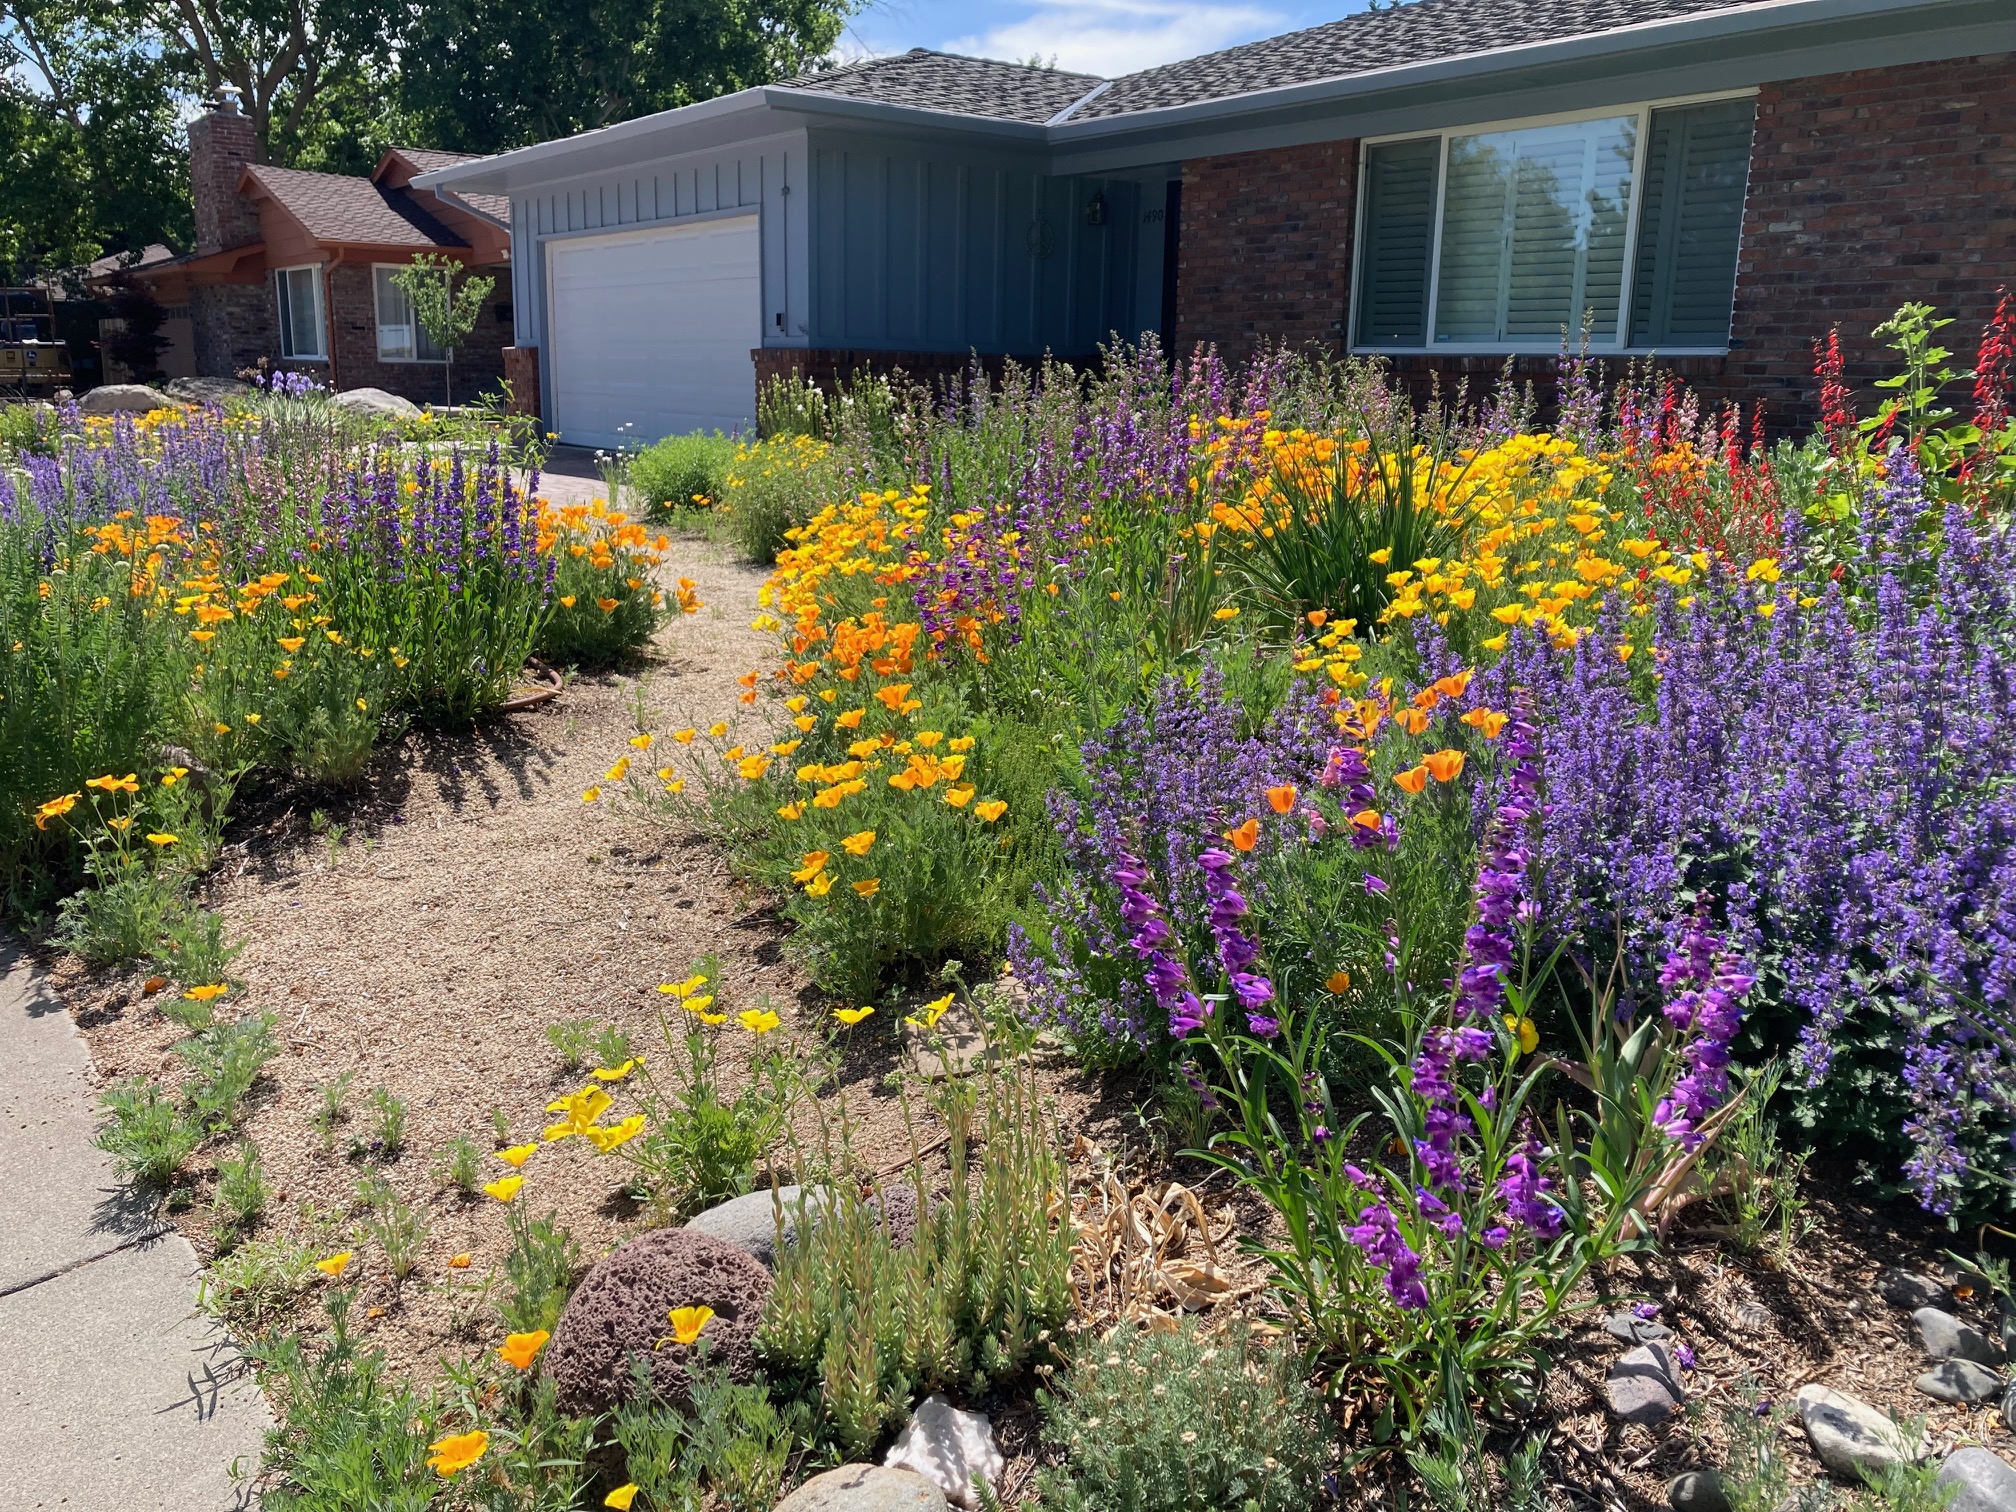 CJensen colorful flowers in pollinator garden outside suburban home